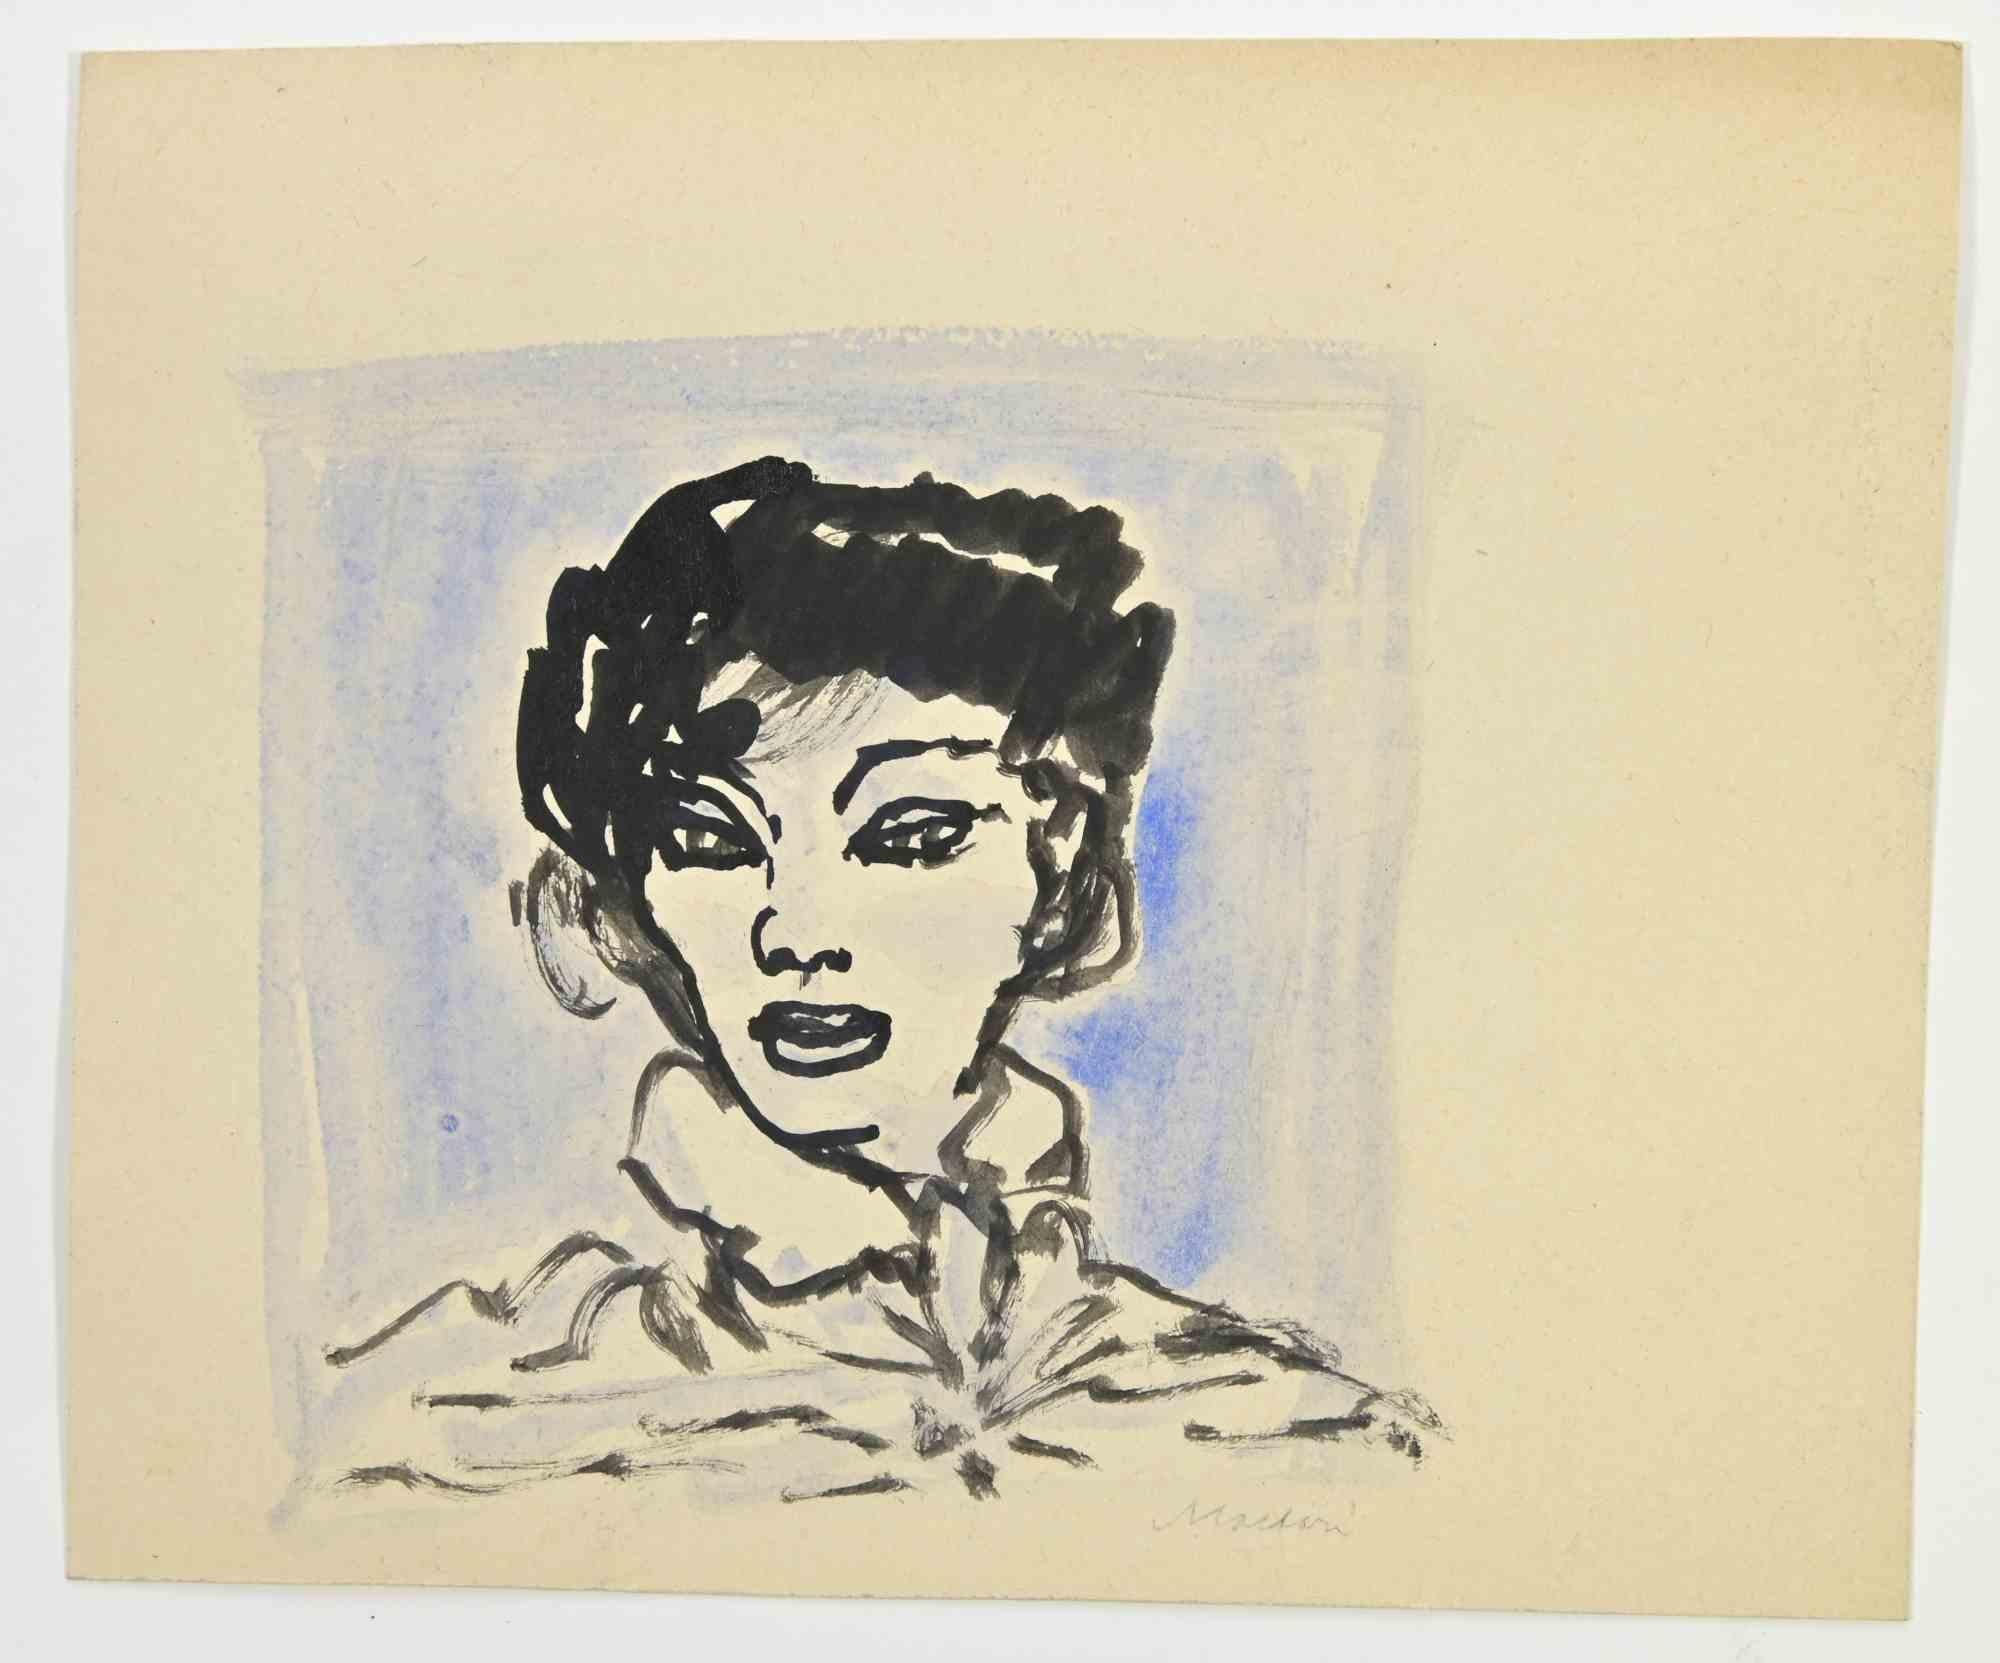 Le portrait - Dessin de Mino Maccari - Années 1960